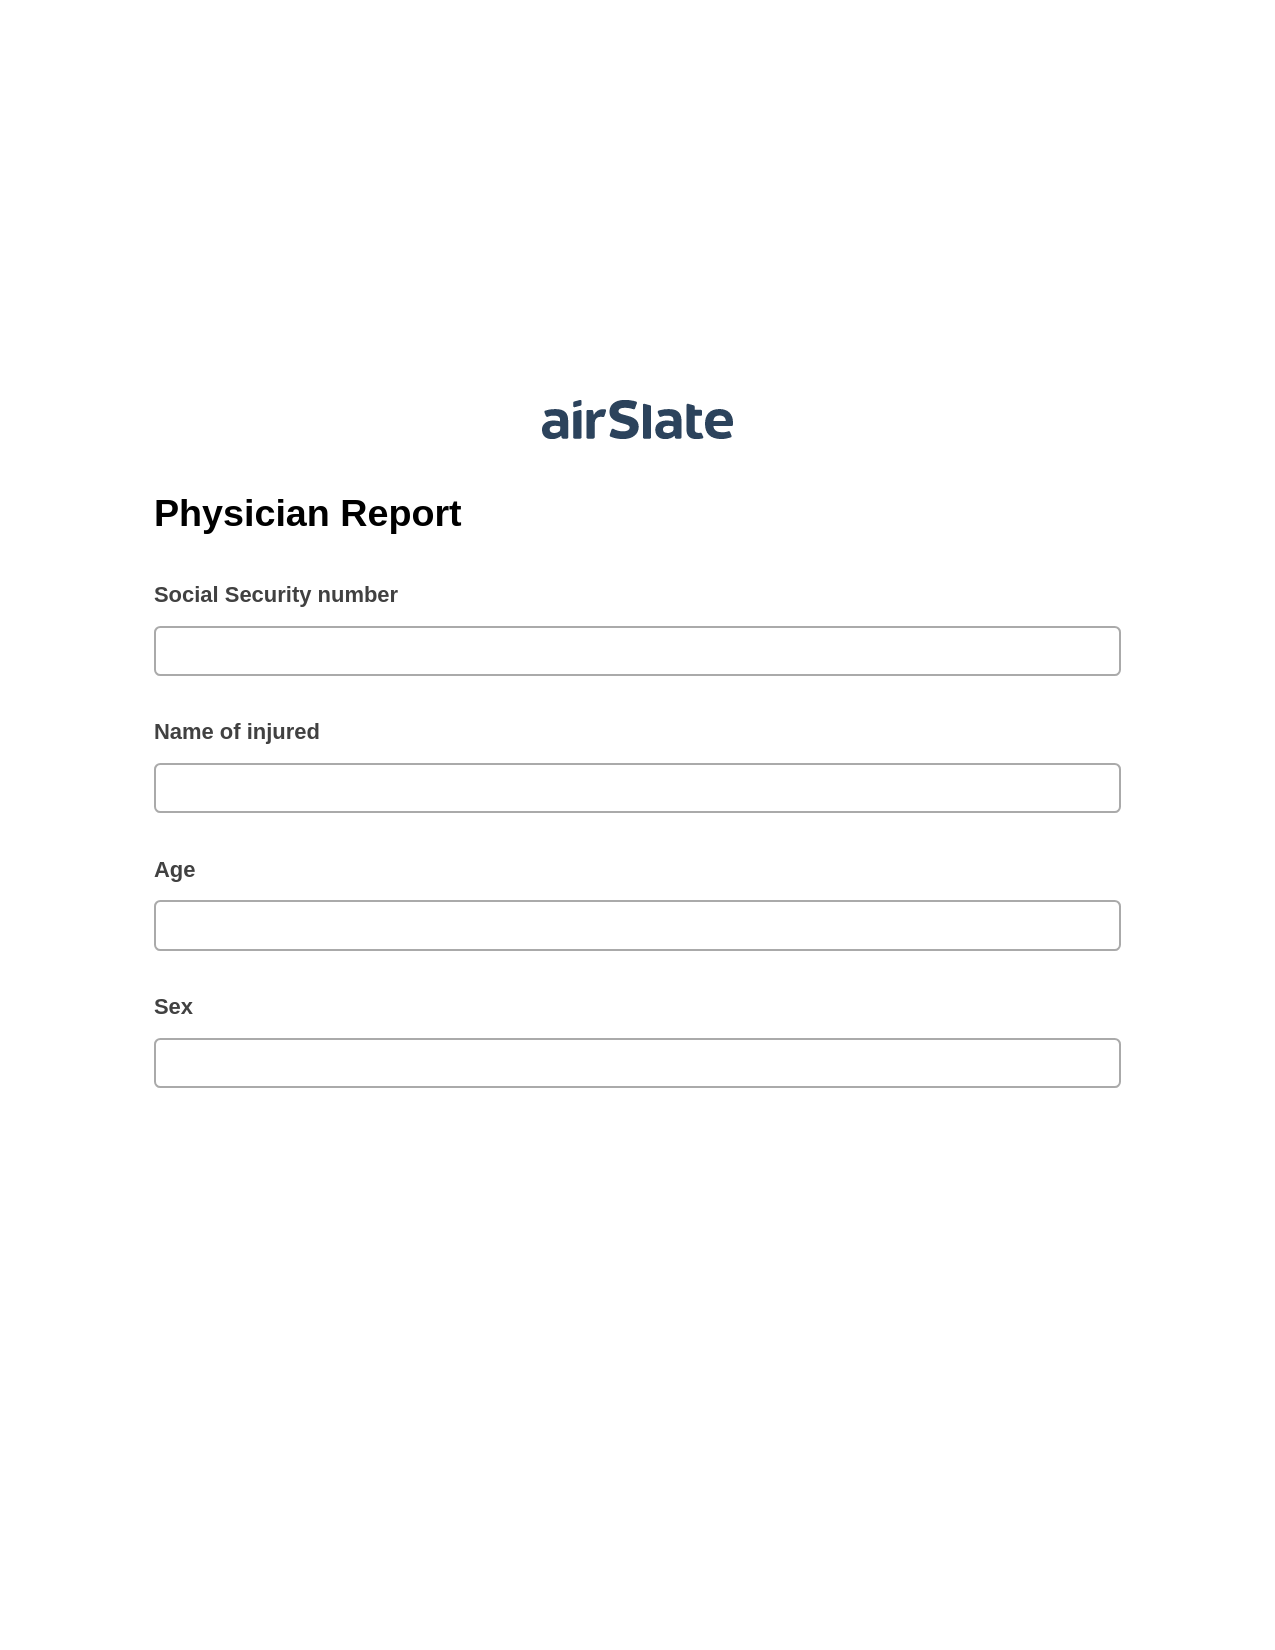 Physician Report Pre-fill Dropdowns from MySQL Bot, Invoke Salesforce Process Bot, Archive to Google Drive Bot